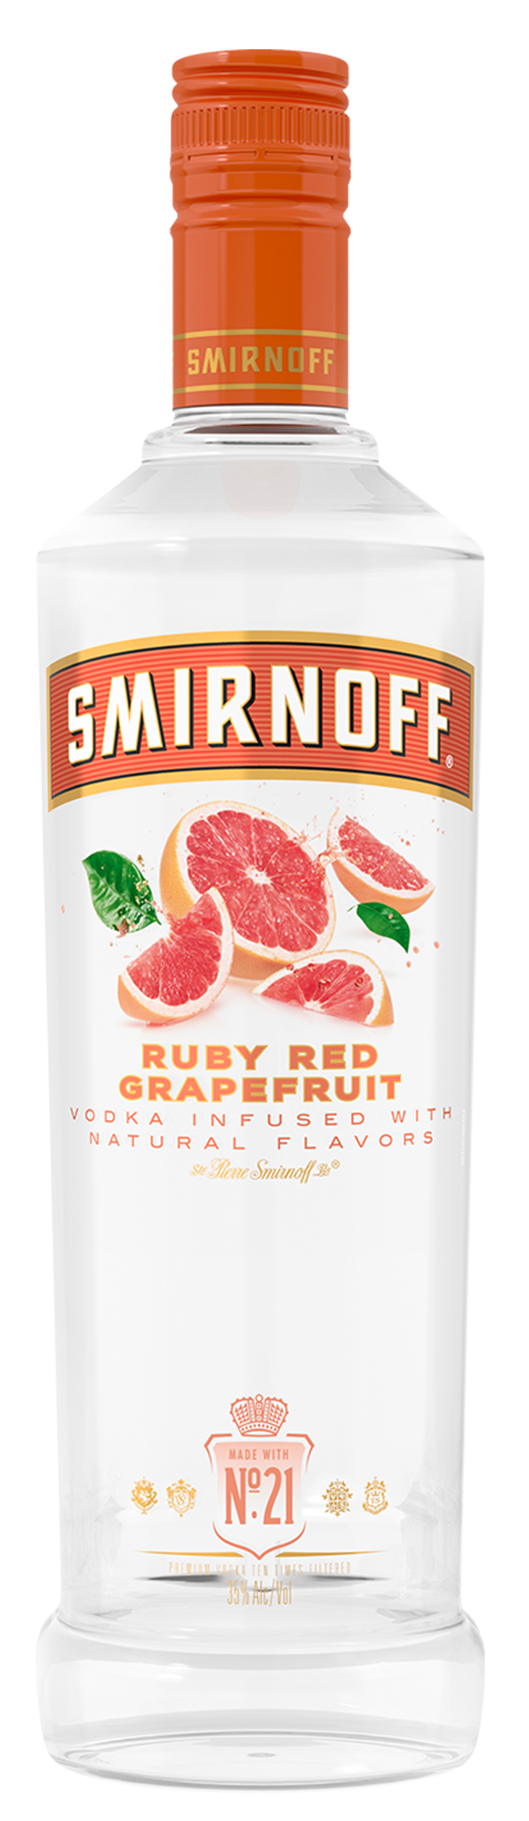 SMIRNOFF RUBY RED GRAPEFRUIT Vodka BeverageWarehouse